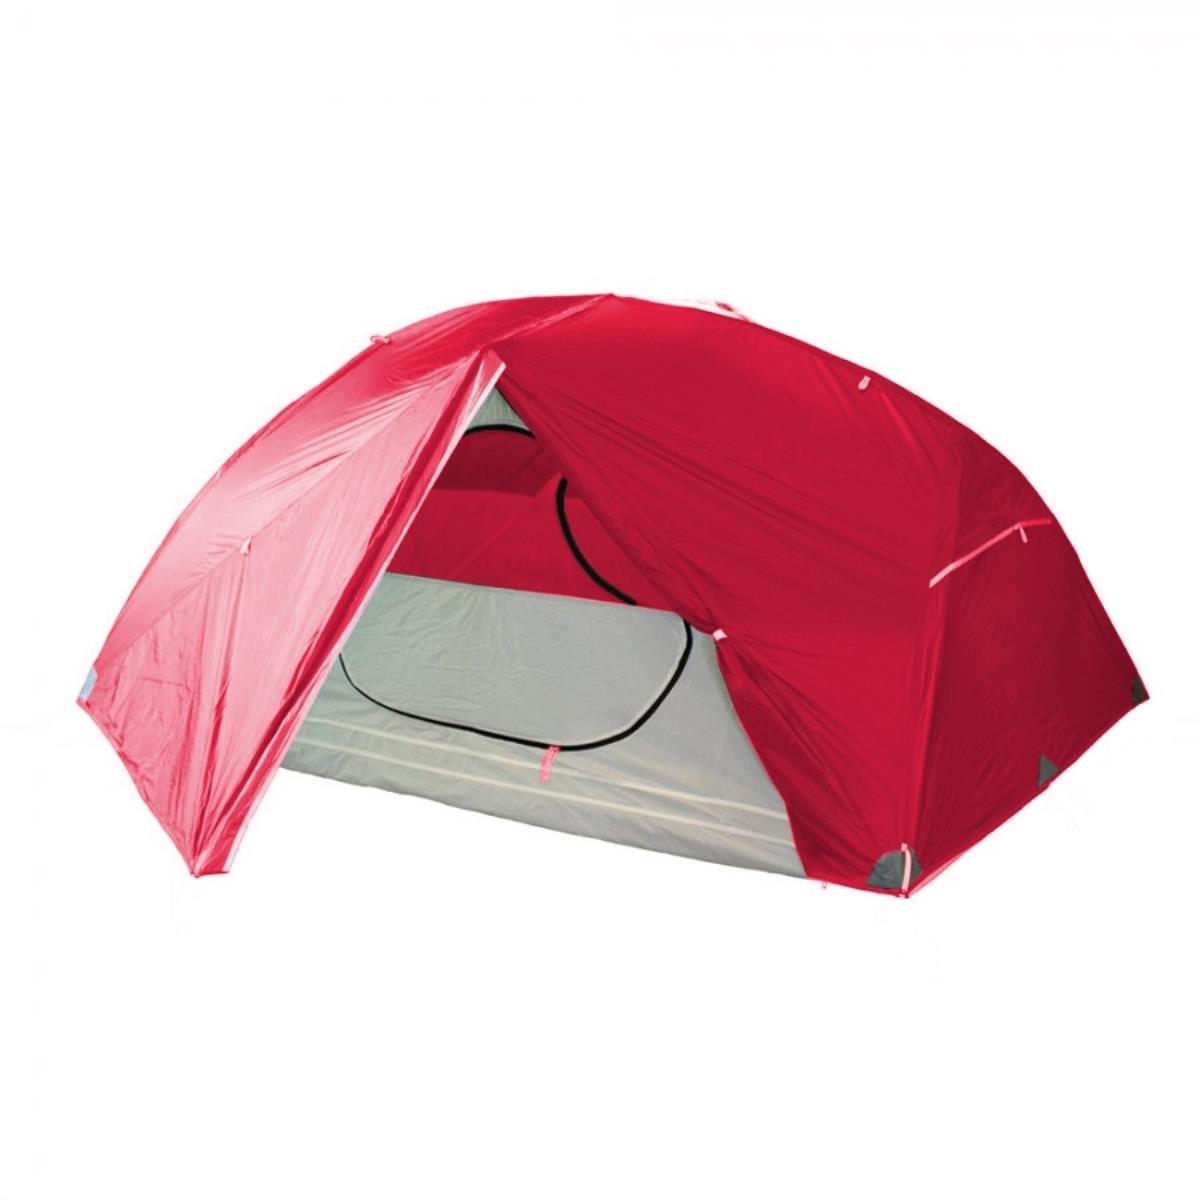 Палатка CLOUD 2 SI красный (TRT-92) TRAMP палатка cloud 2 si красный trt 92 tramp